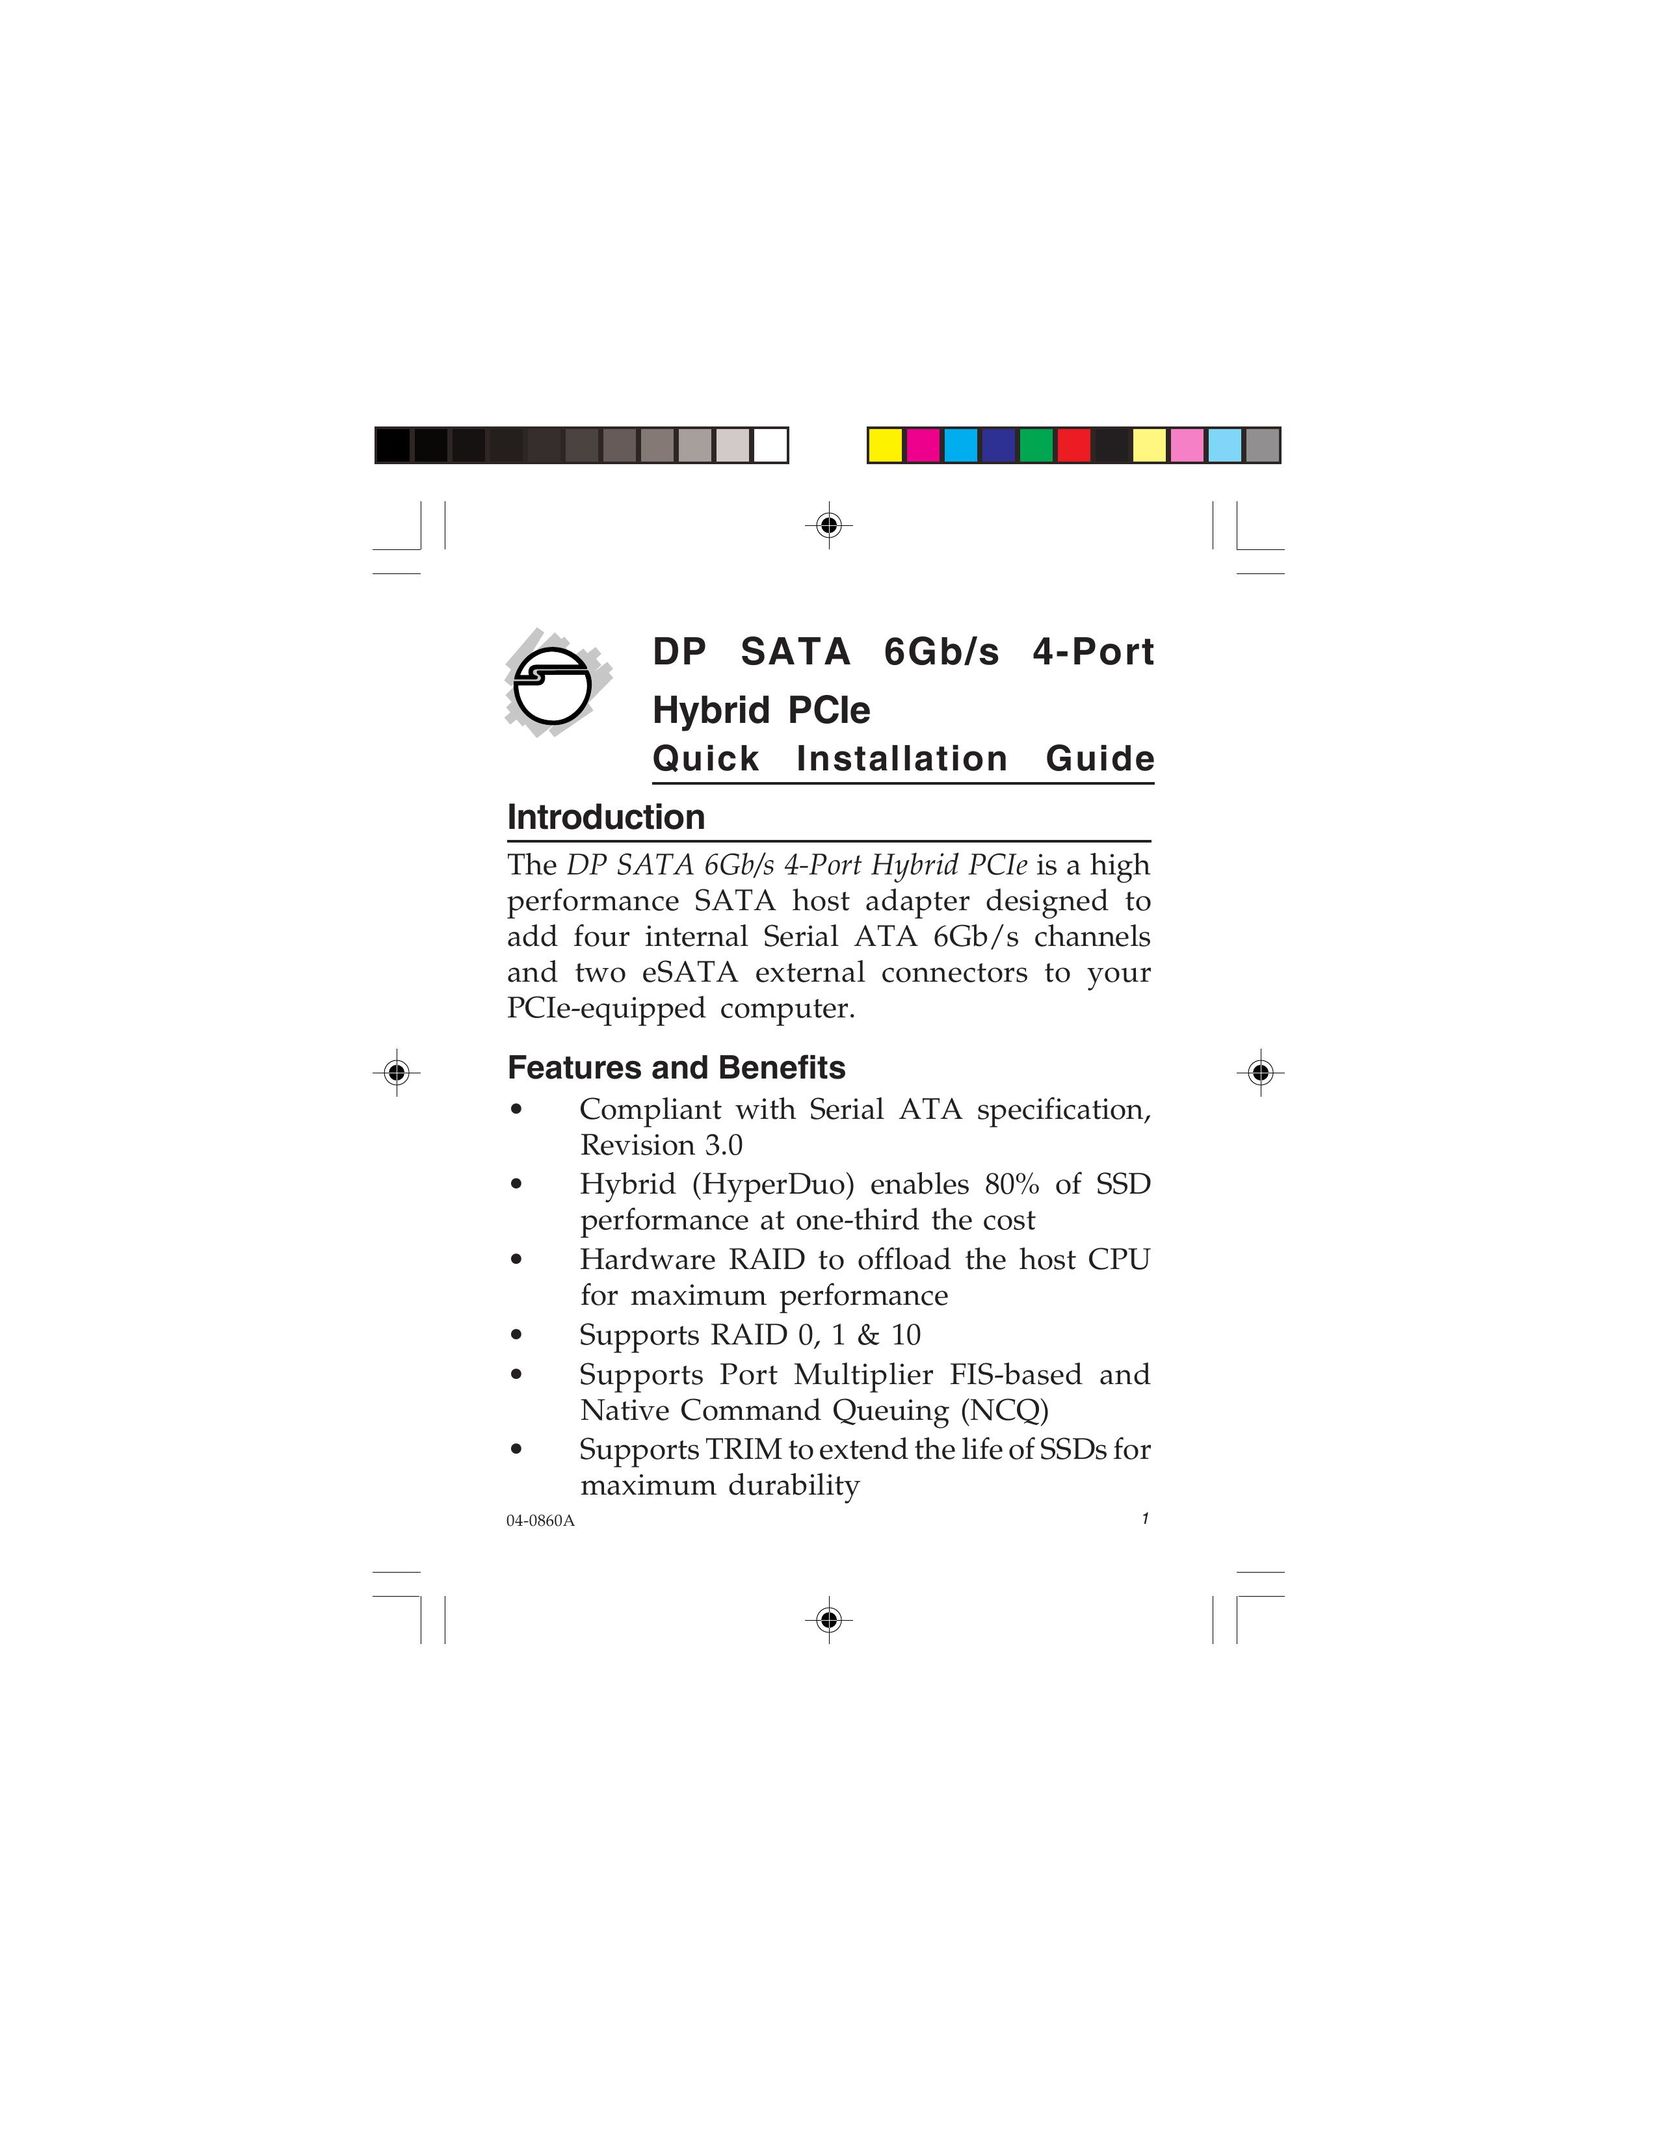 SIIG 04-0860A Computer Drive User Manual